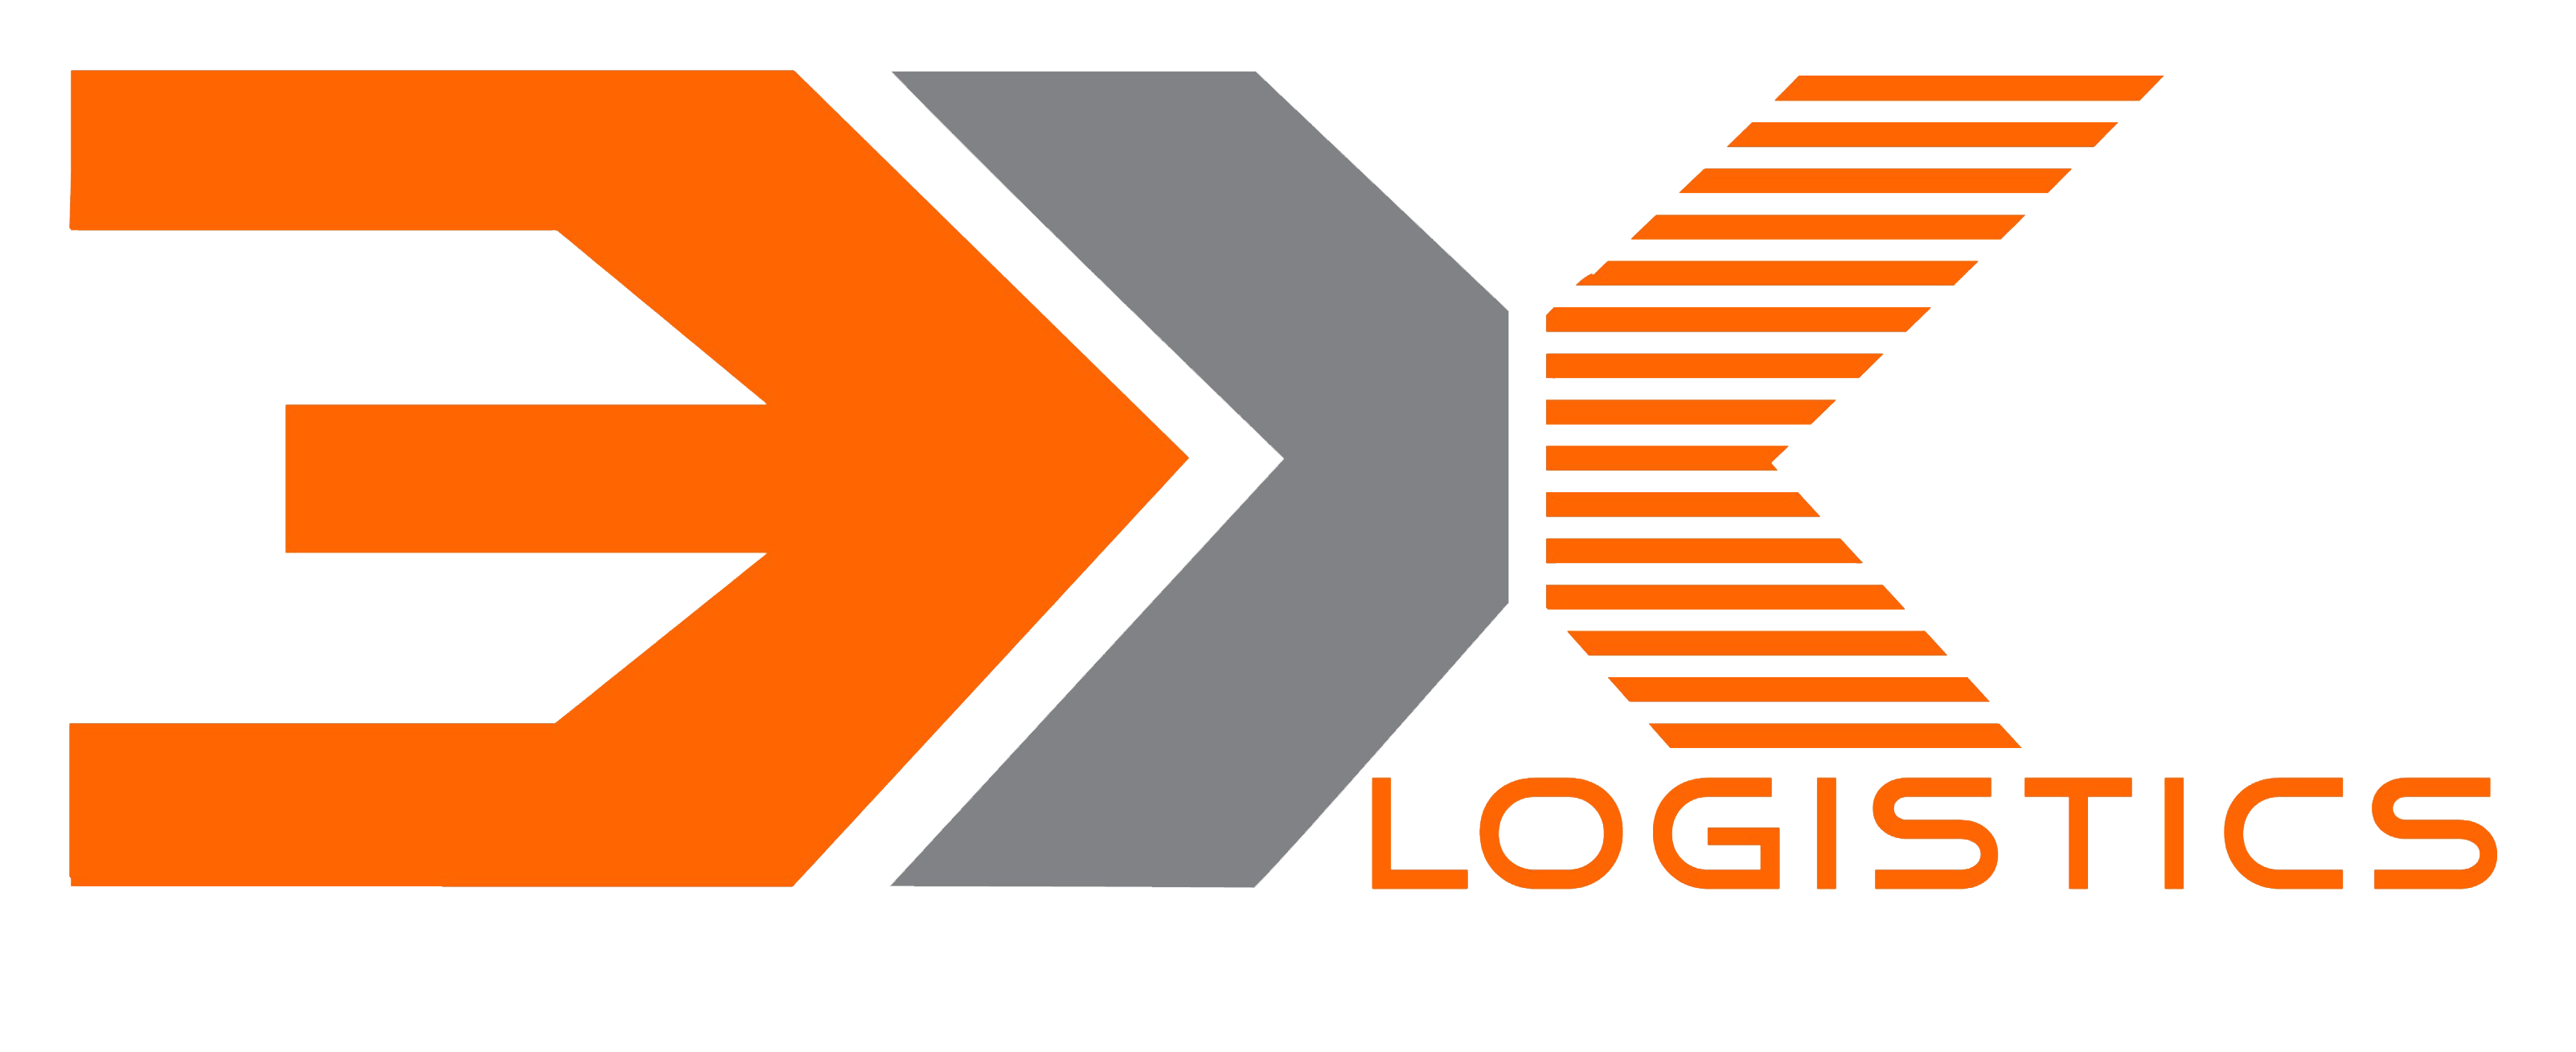 3X Logistics